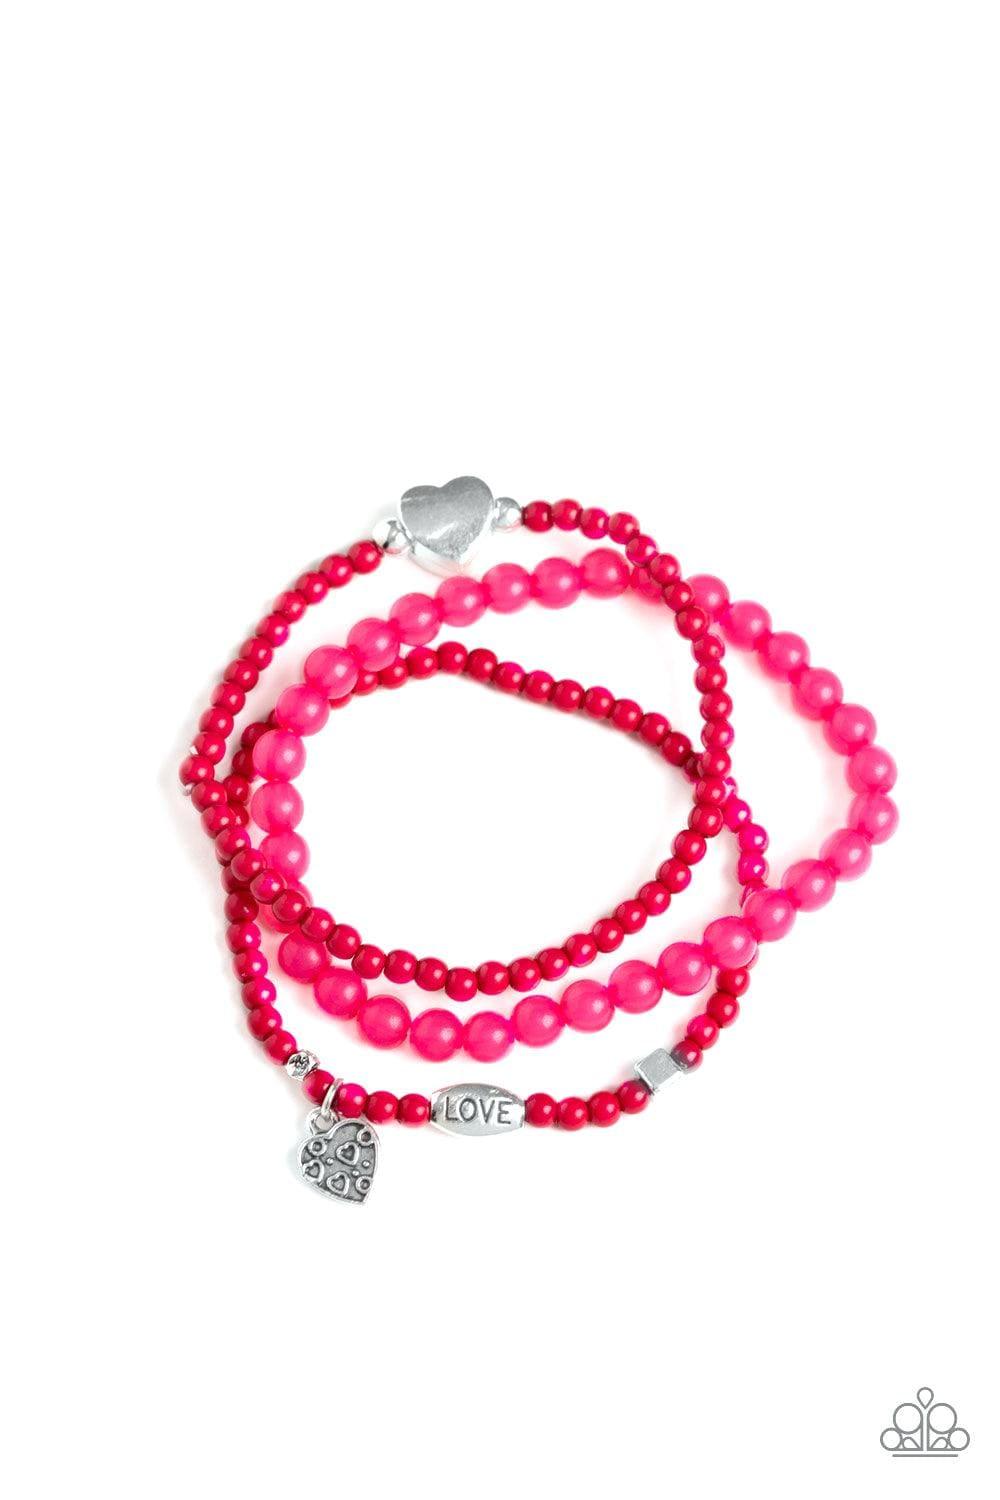 Paparazzi Accessories - Really Romantic - Pink Bracelet - Bling by JessieK